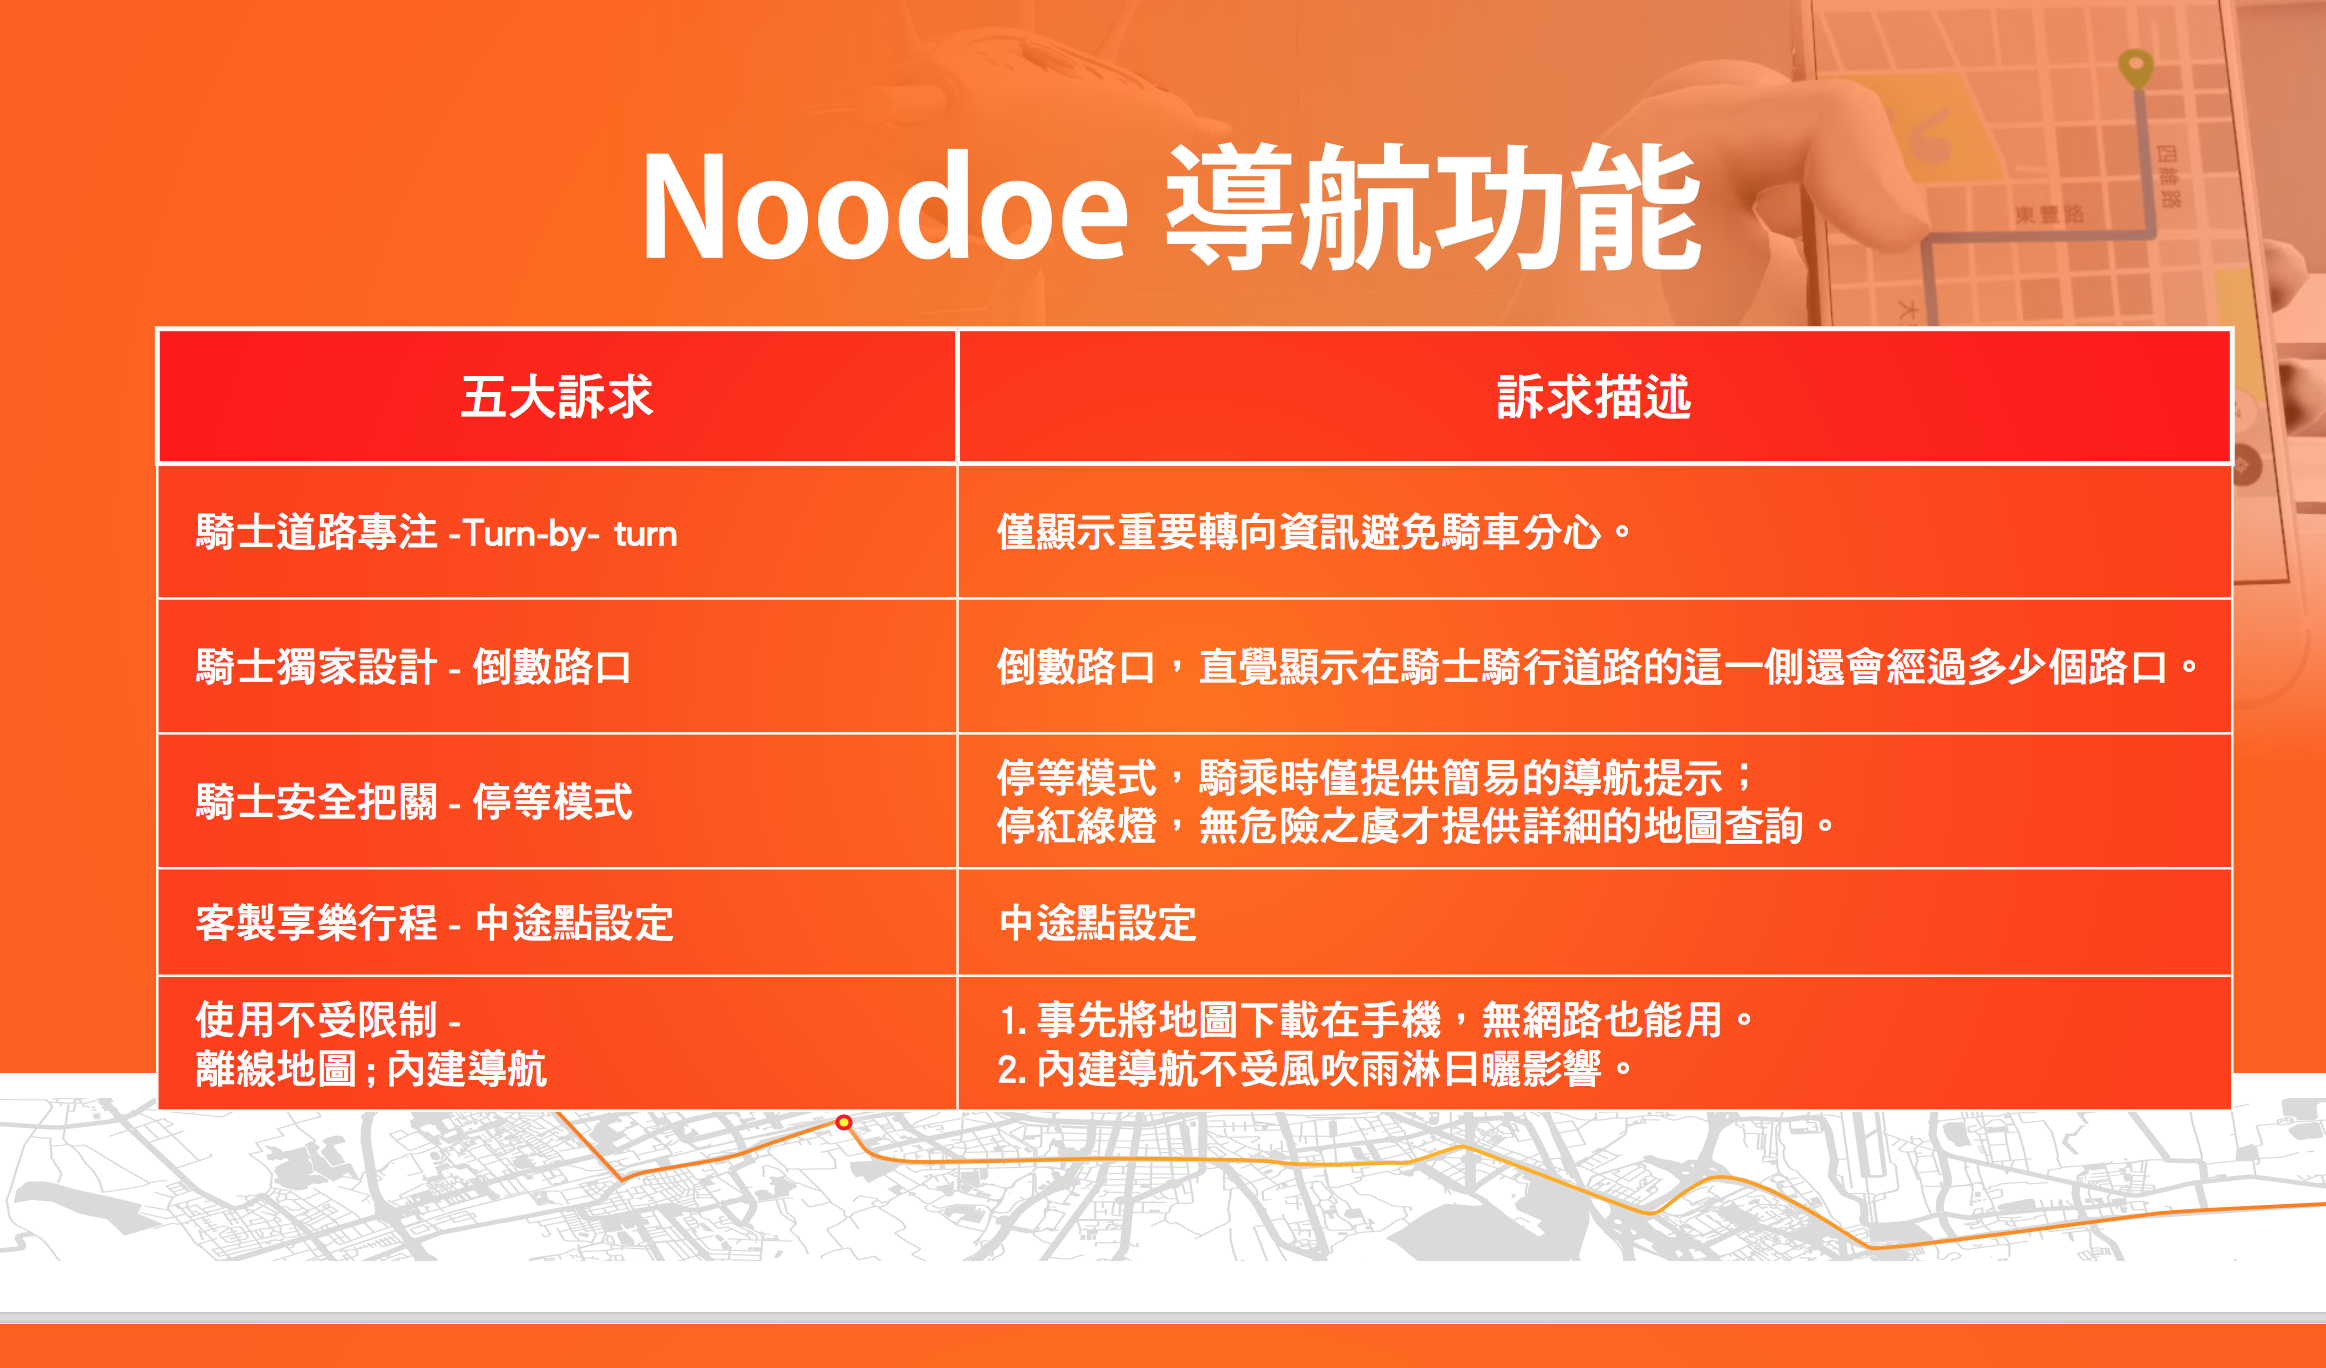 透過表格，可以清楚看出Noodoe Navigation的產品特點